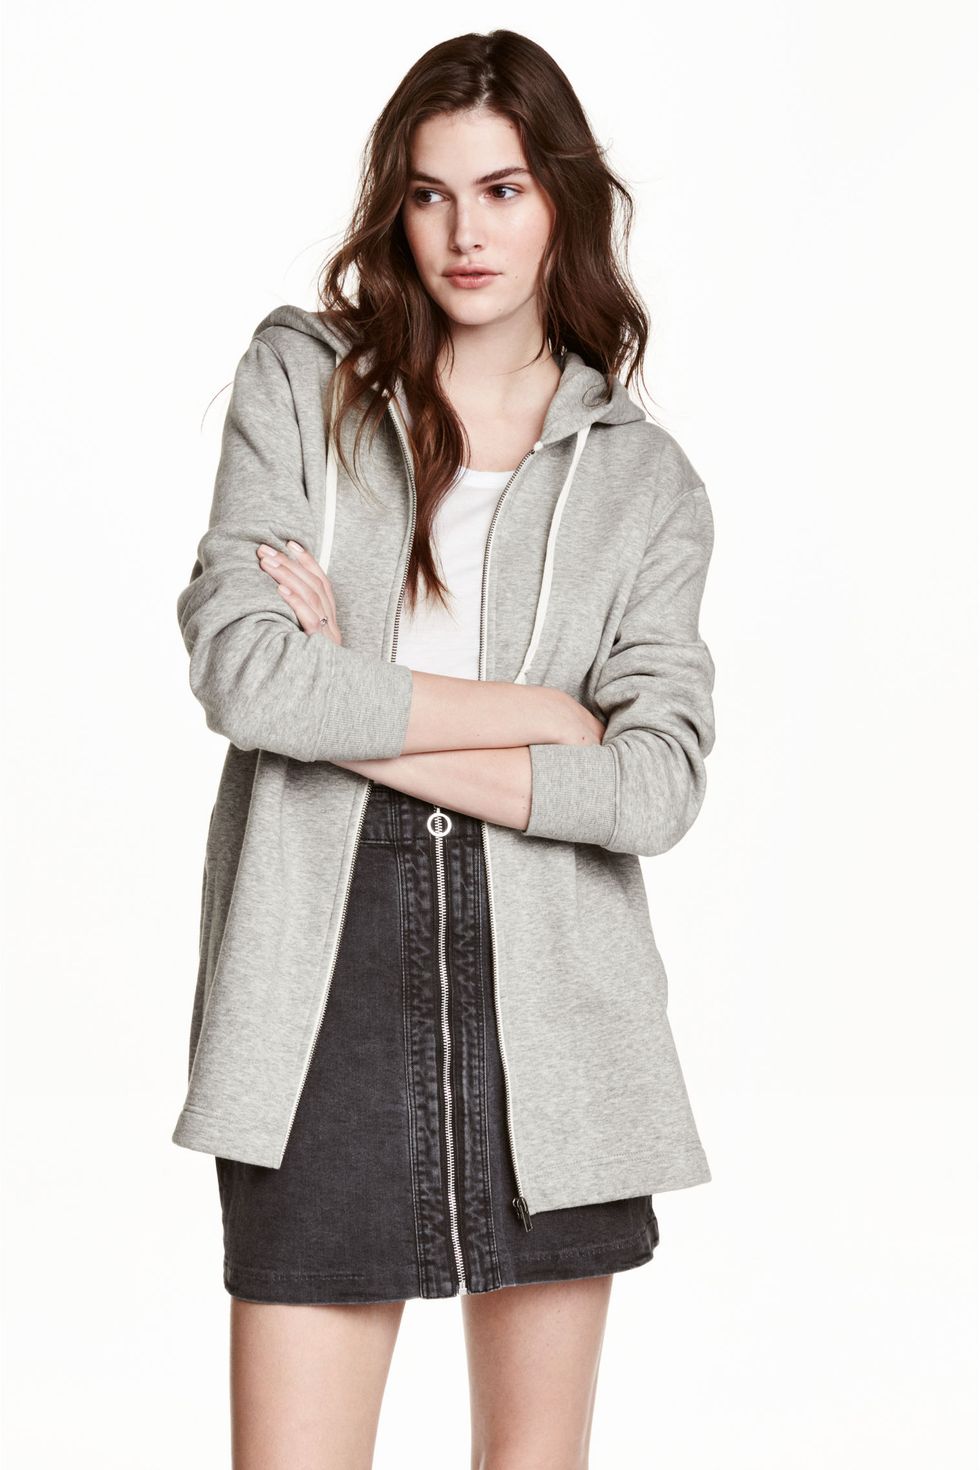 H&M grey hoody